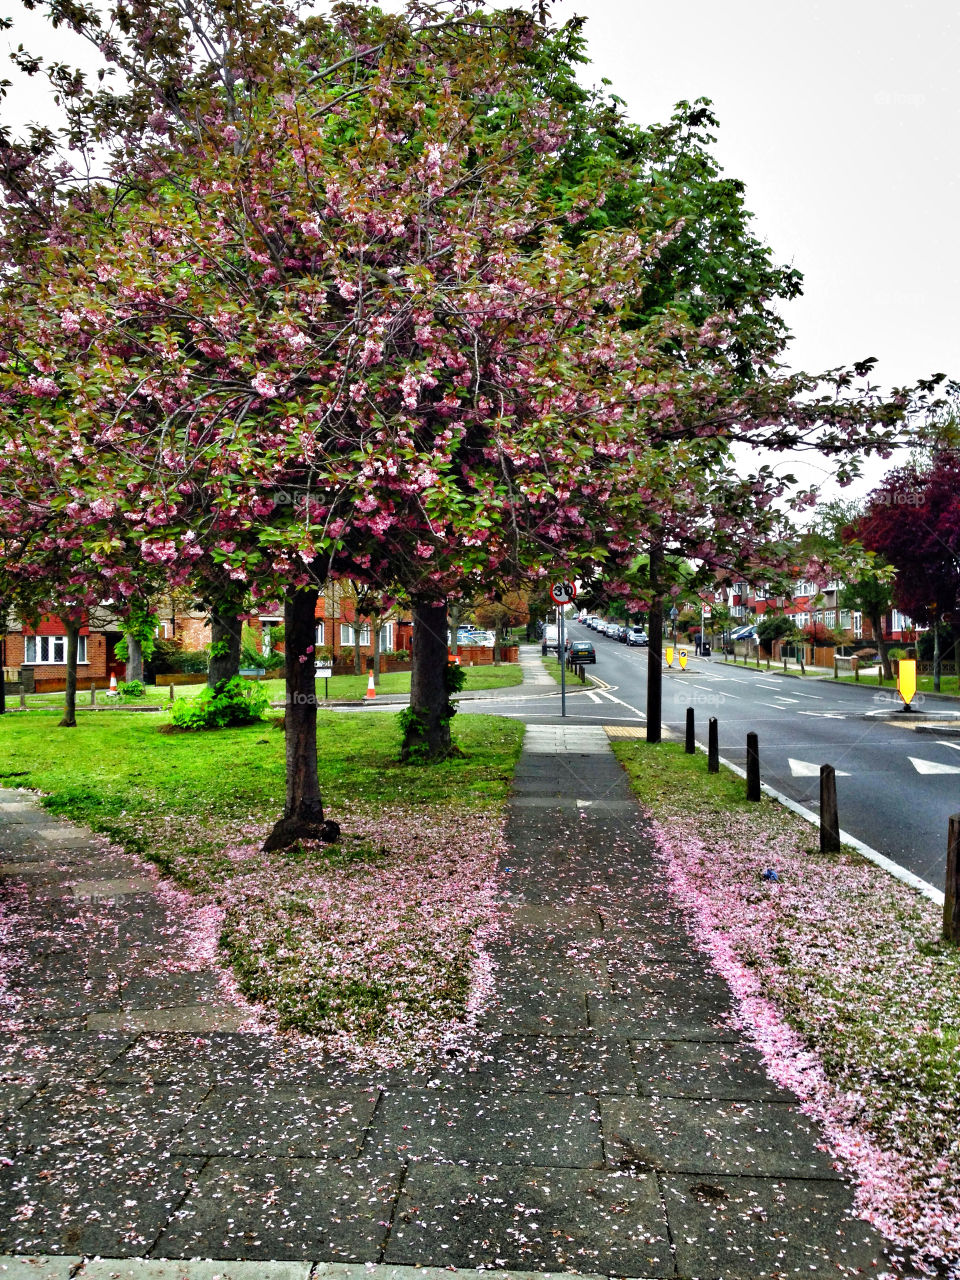 spring flowers pink london by muaddib64